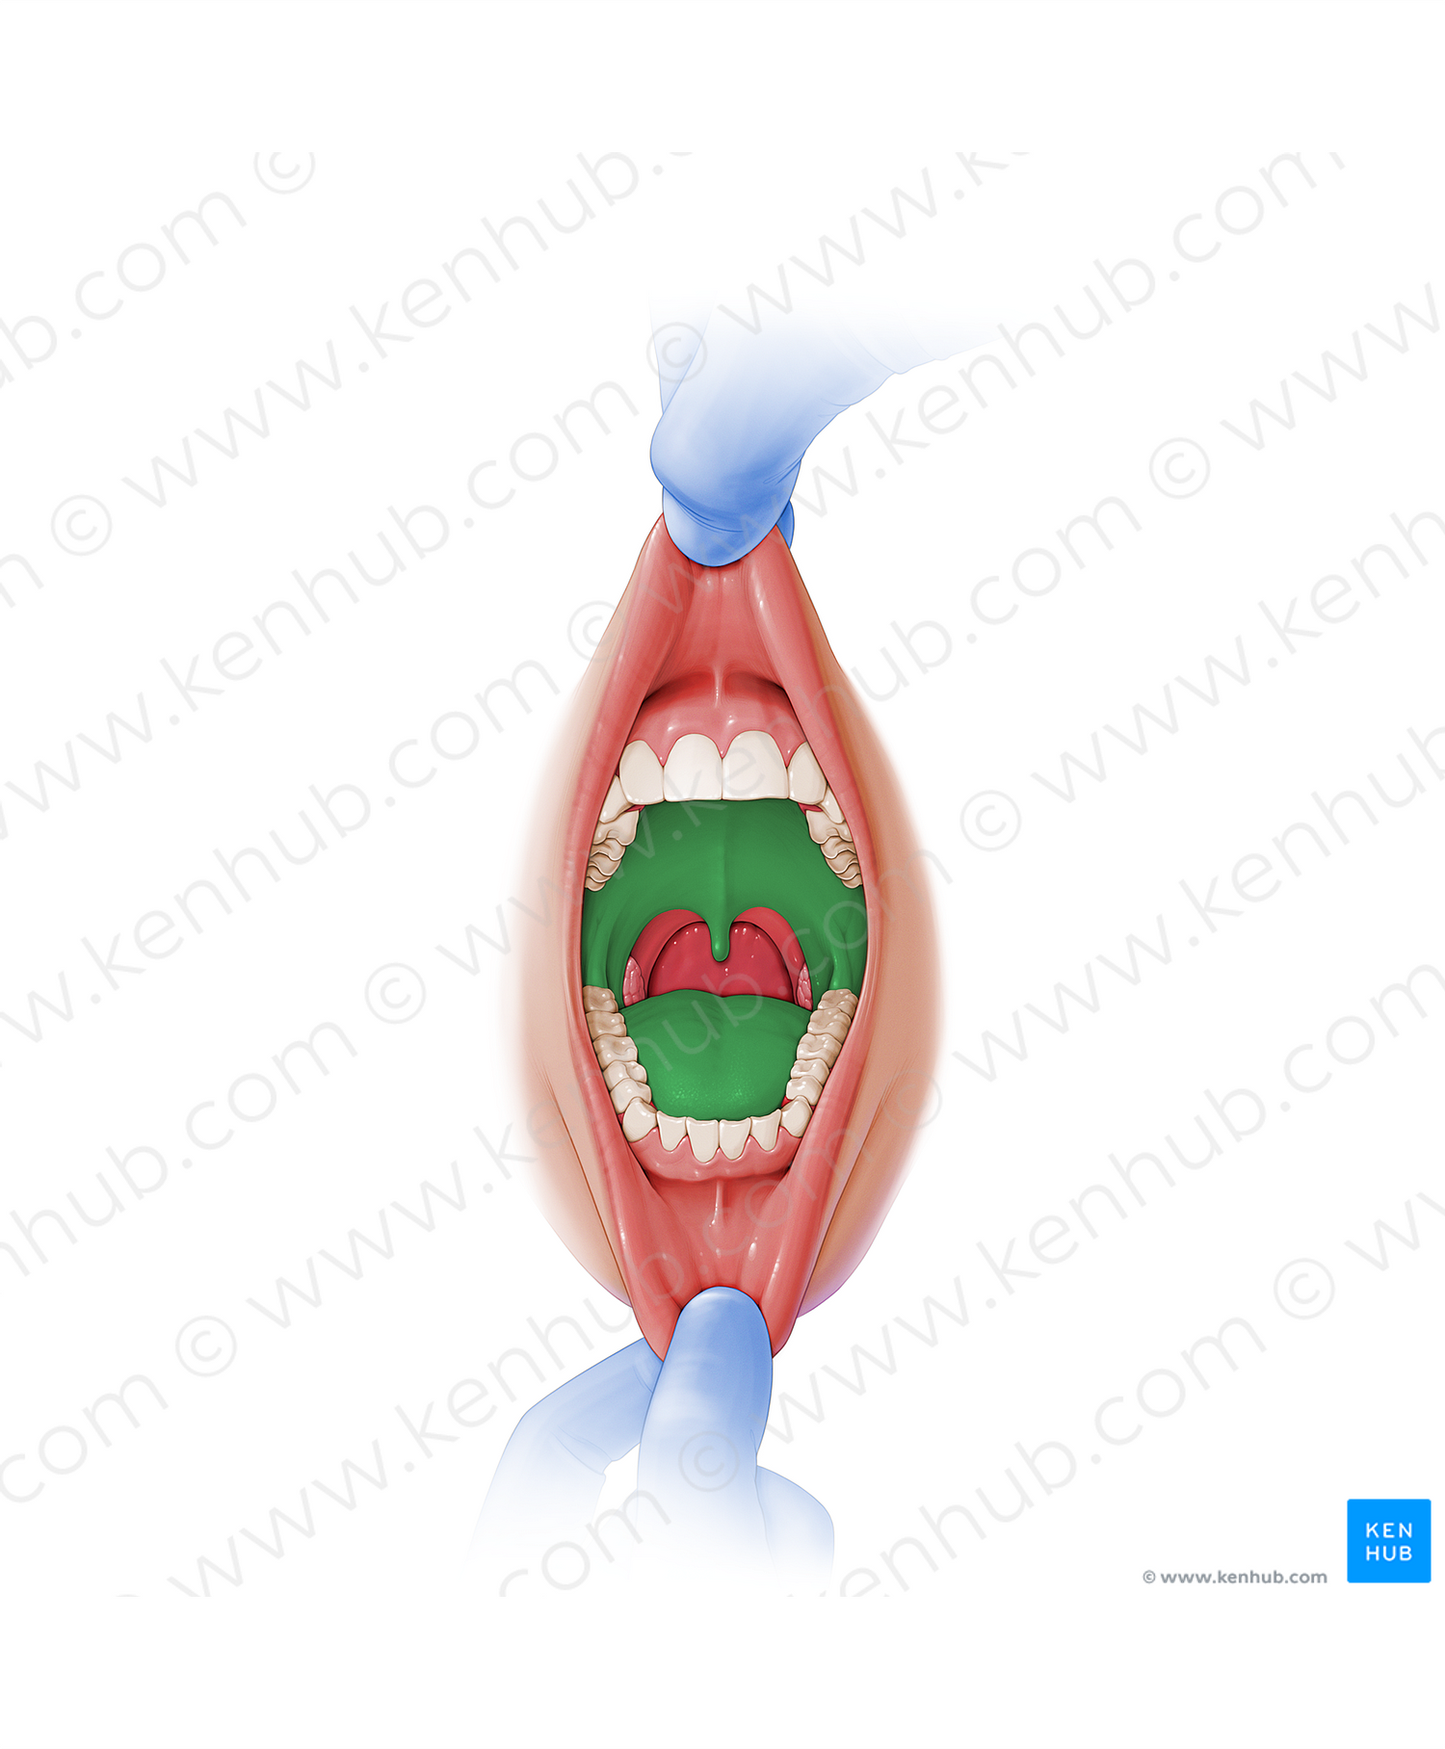 Oral cavity proper (#2536)